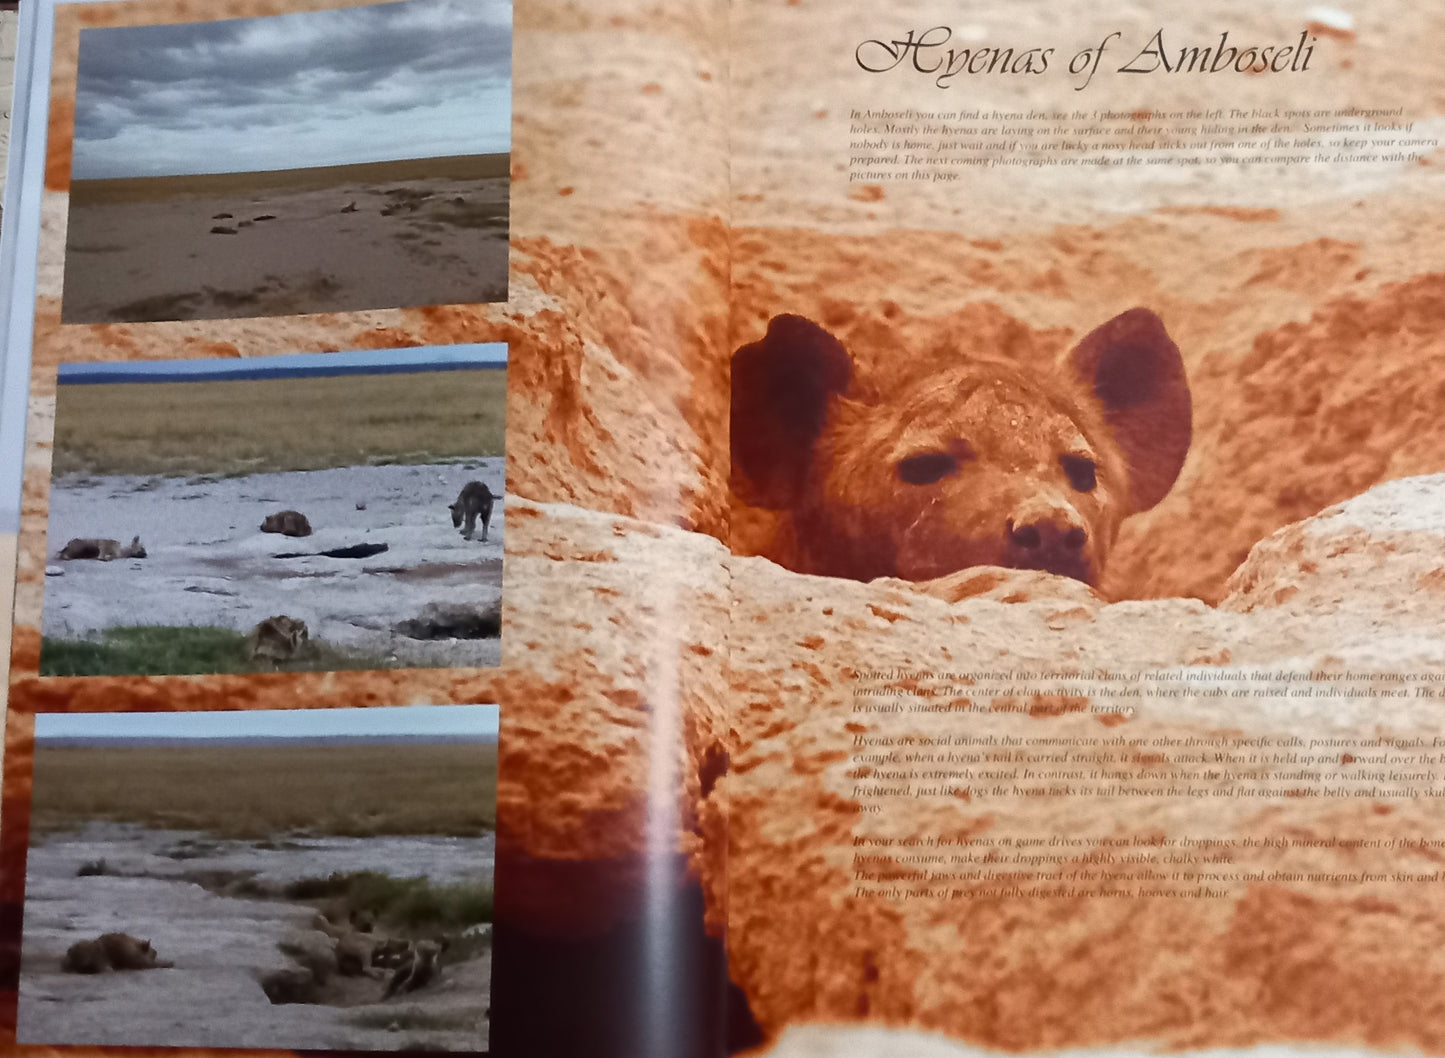 Photobook, hard cover, Amboseli National Park - Kenya